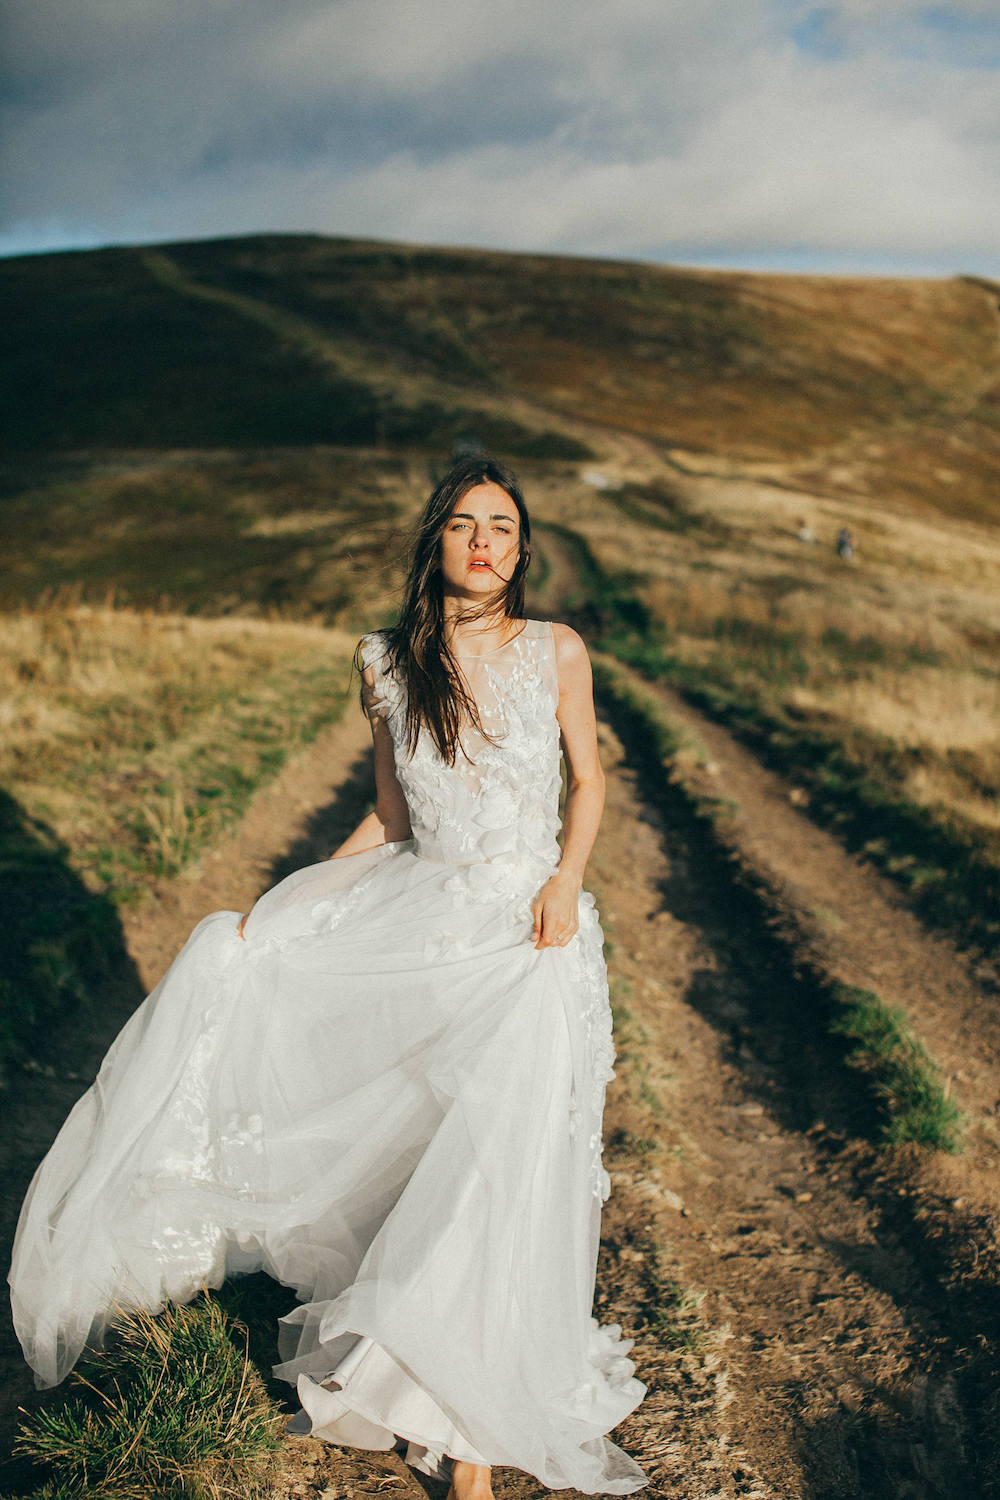 20 Romantic Ethereal Wedding Dresses